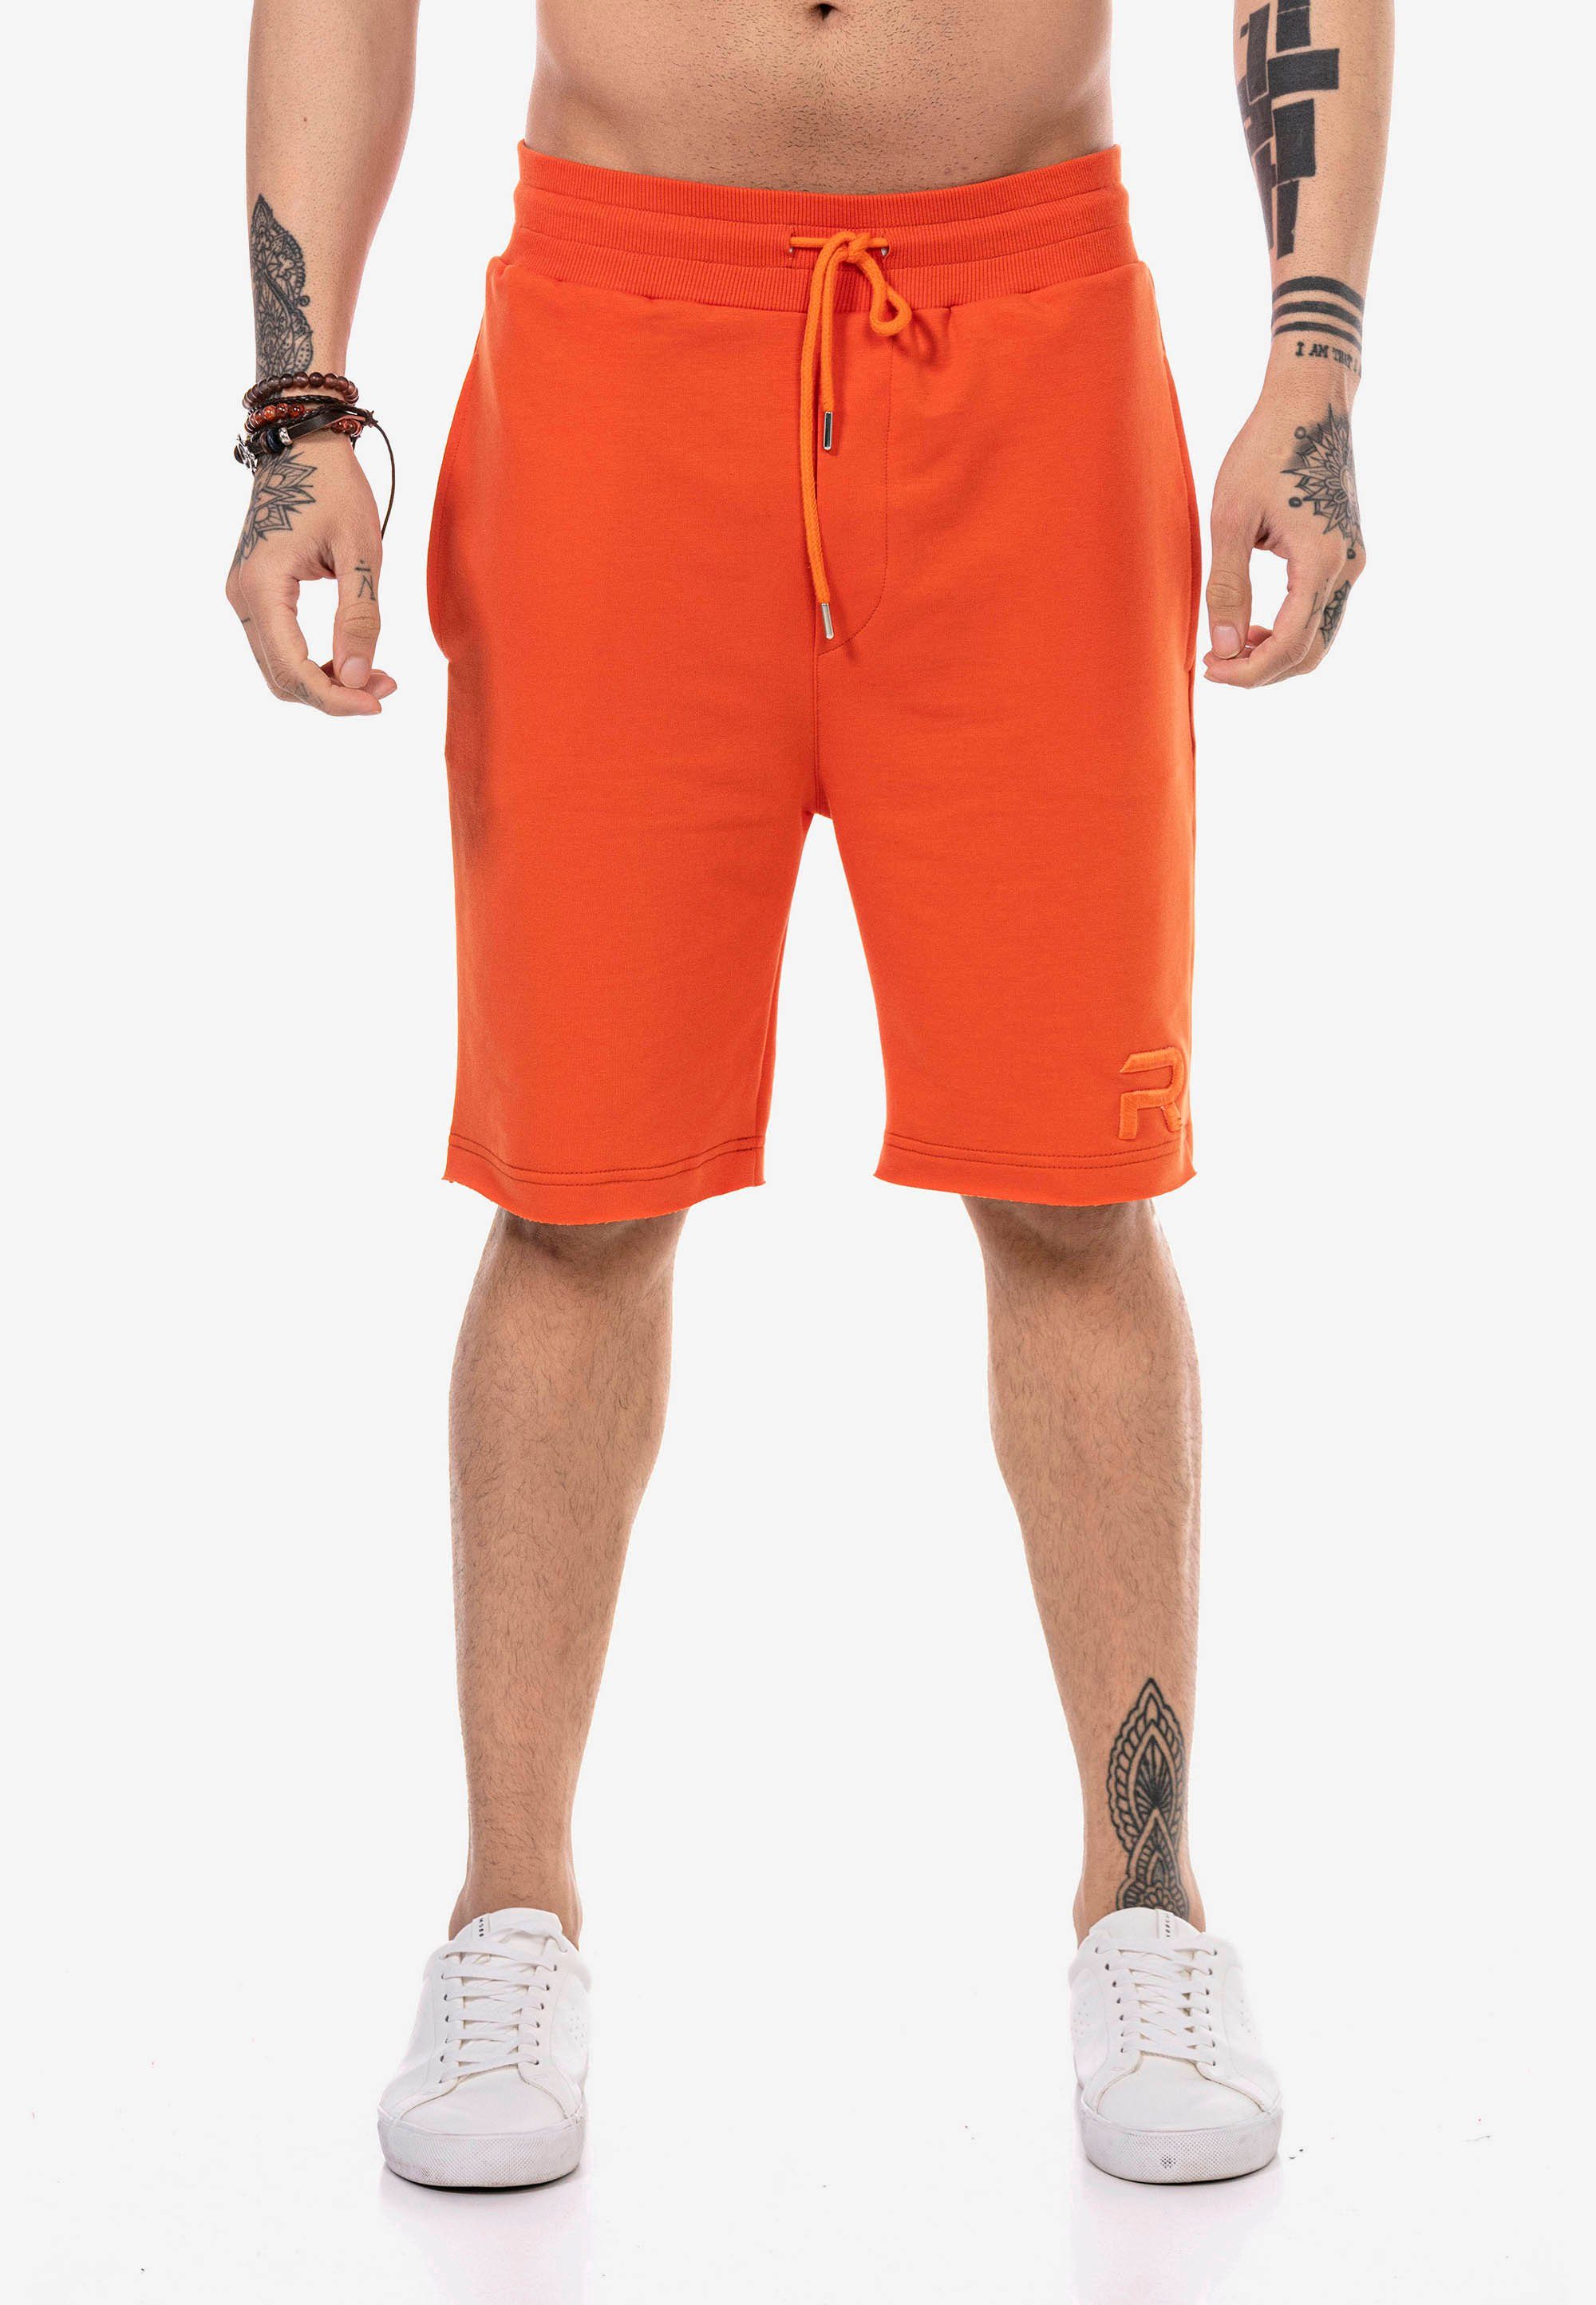 RedBridge Shorts Lincoln mit Stickerei orange | Shorts